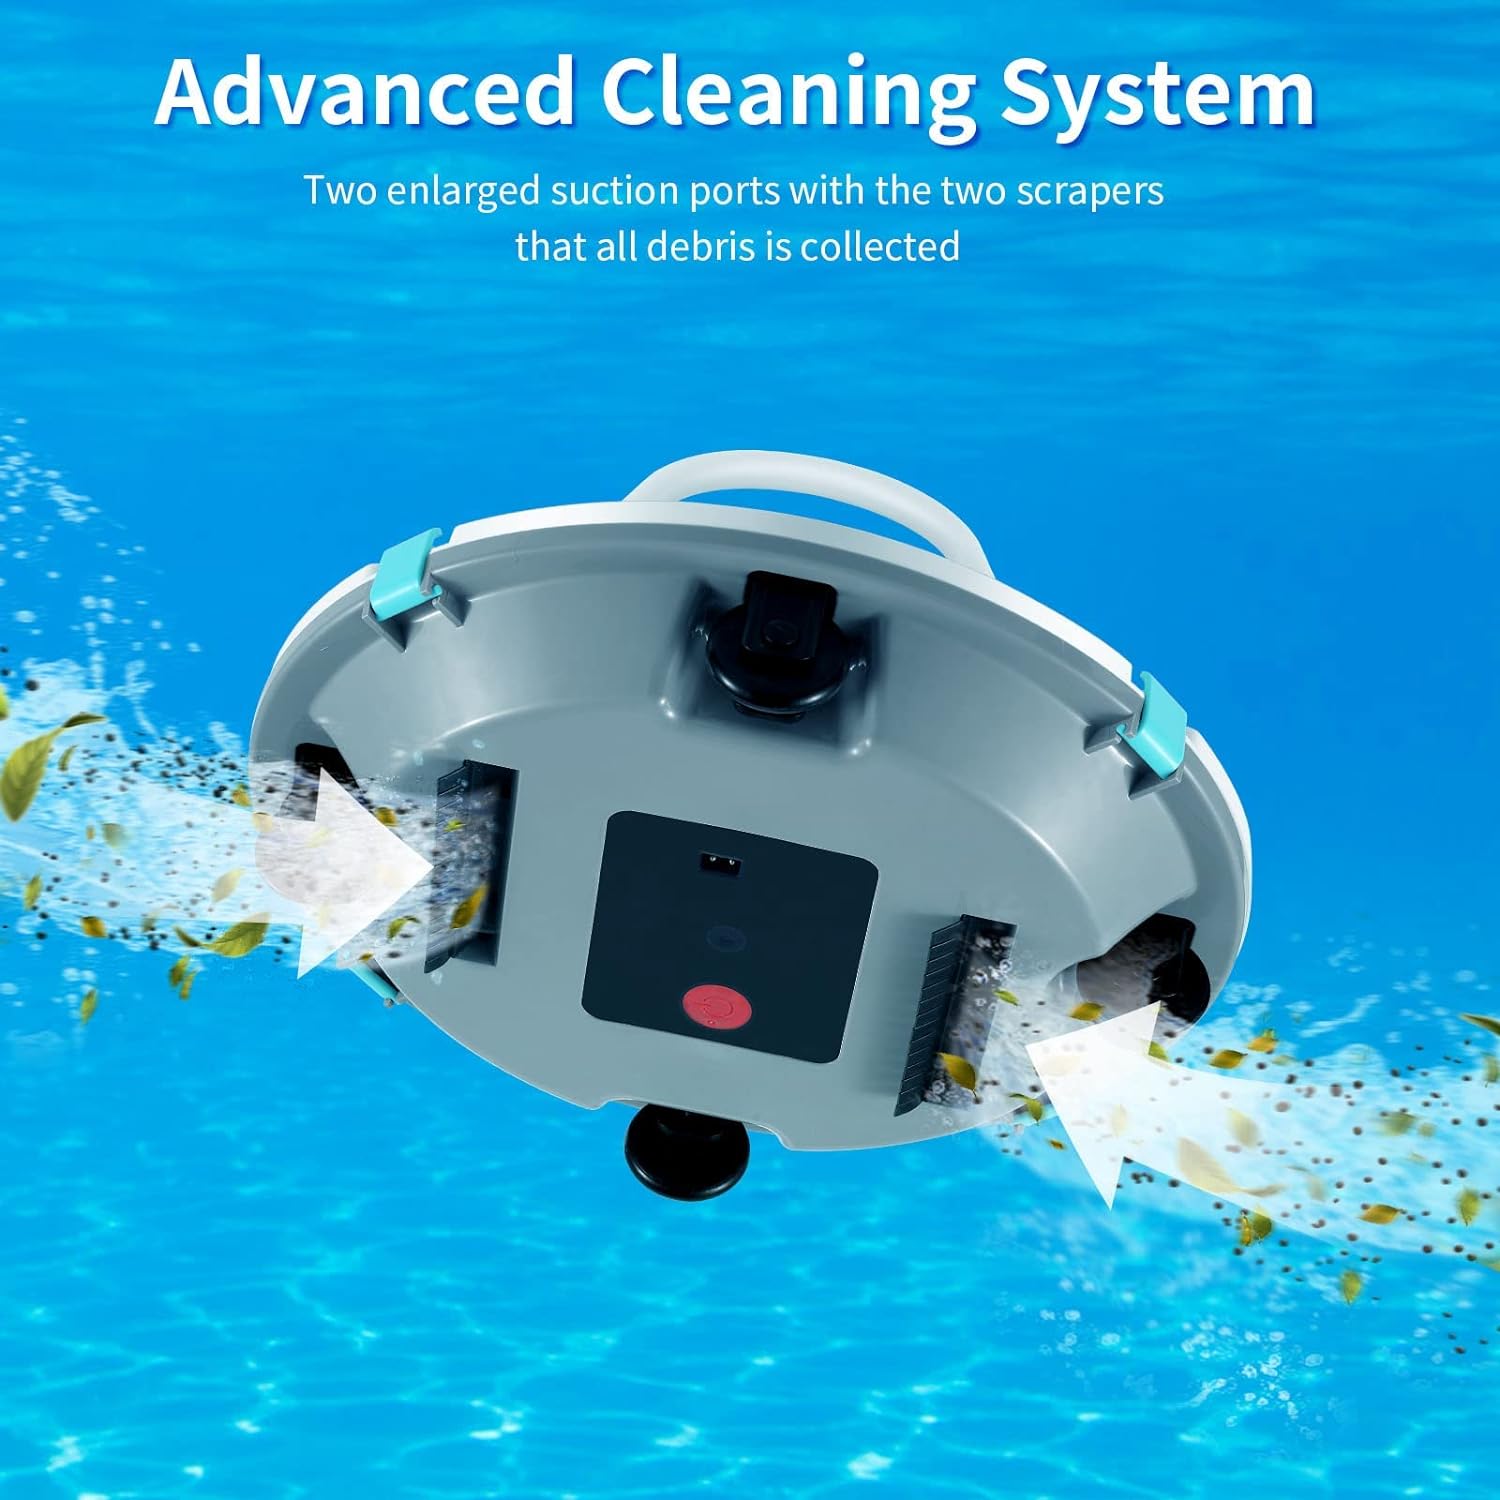 Synopsis: Moolan Cordless Pool Vacuum Cleaner, Robotic Pool Cleaner, Dual-Motor, Self-Parking